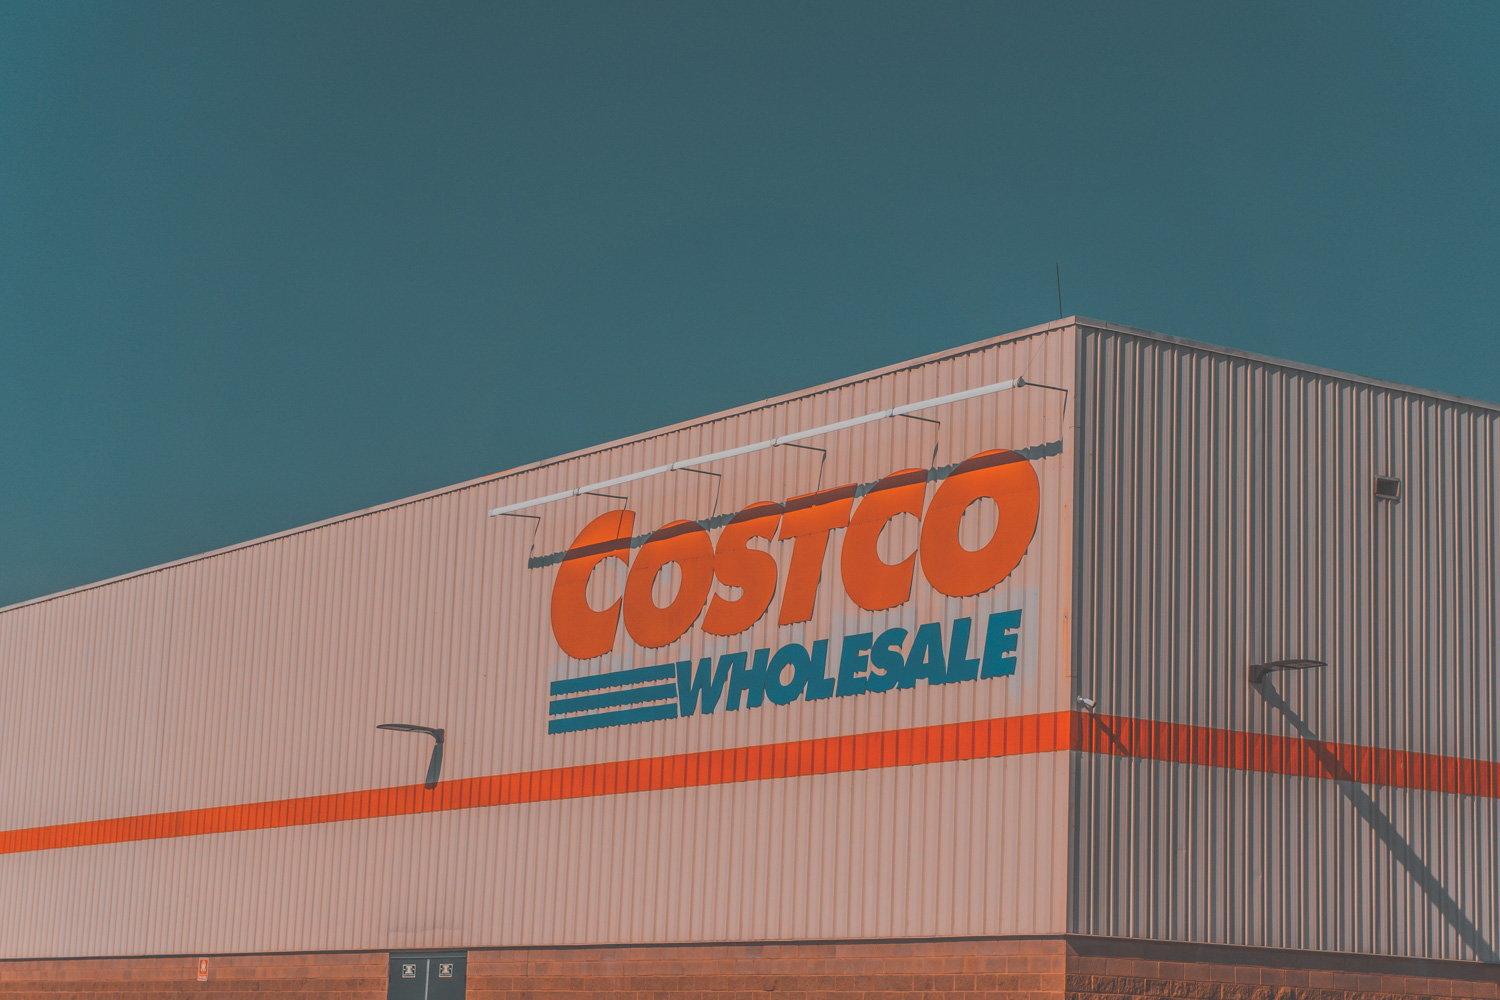 9 Ways To Find The Best Costco Deals